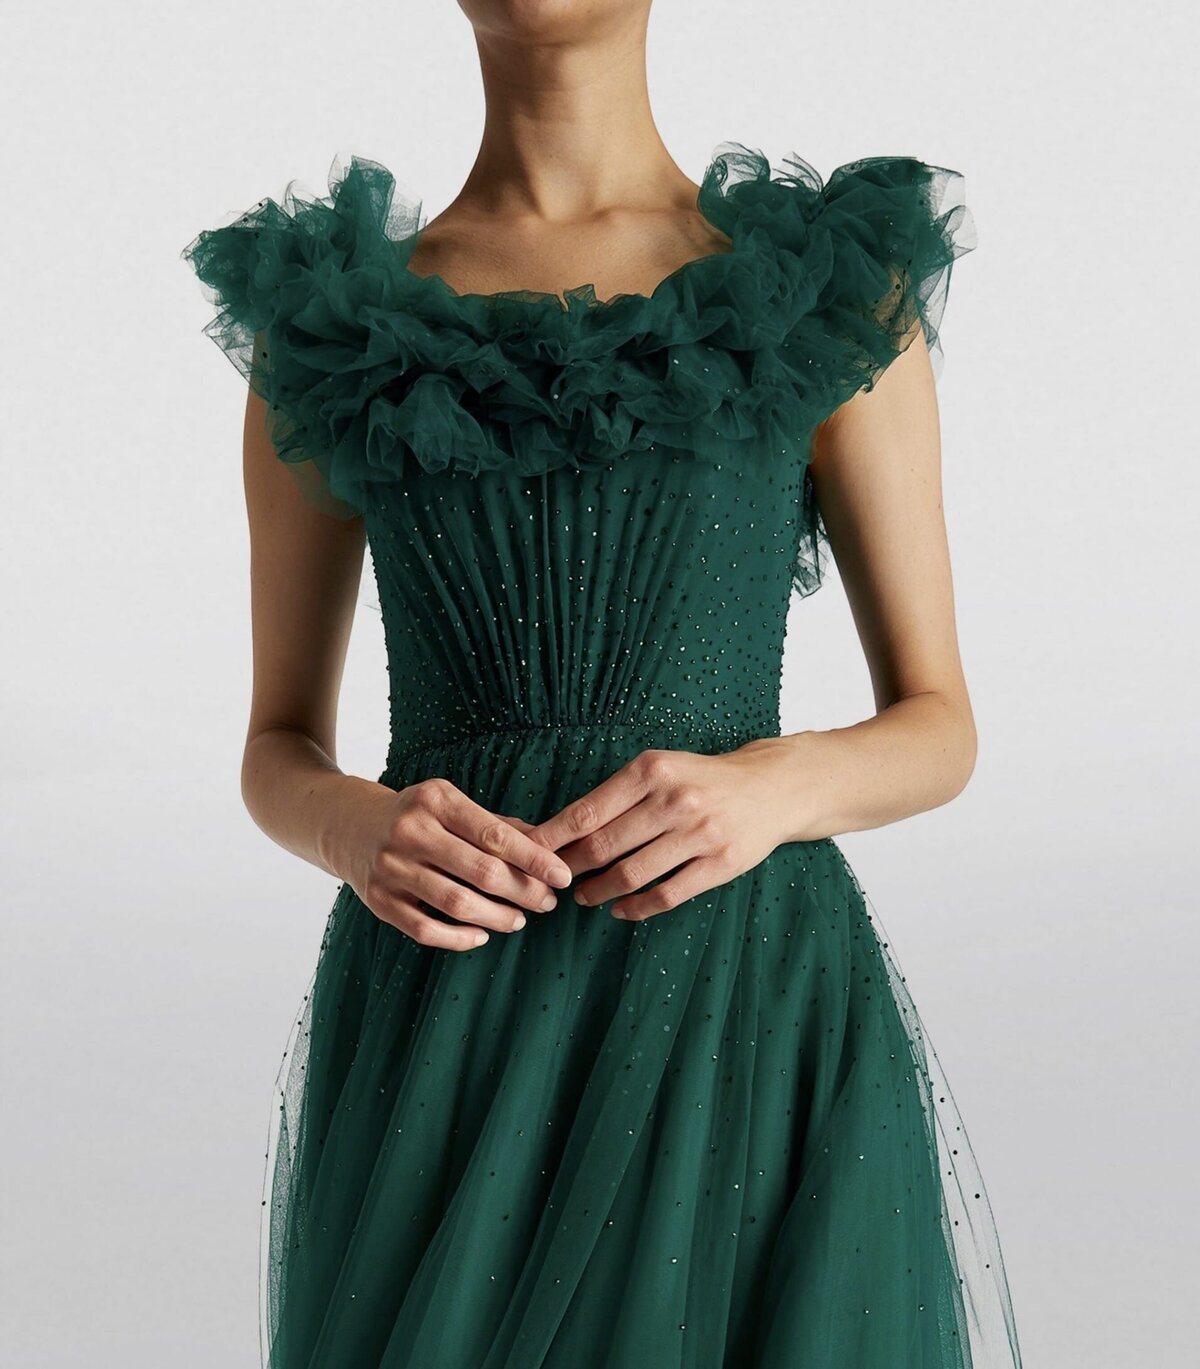 Kate-Middleton-Princess-of-Wales-Royal-Tour-Dress-Jenny-Packham-Wonder-Off-the-Shoulder-Ruffled-Tulle-Green-Gown-2